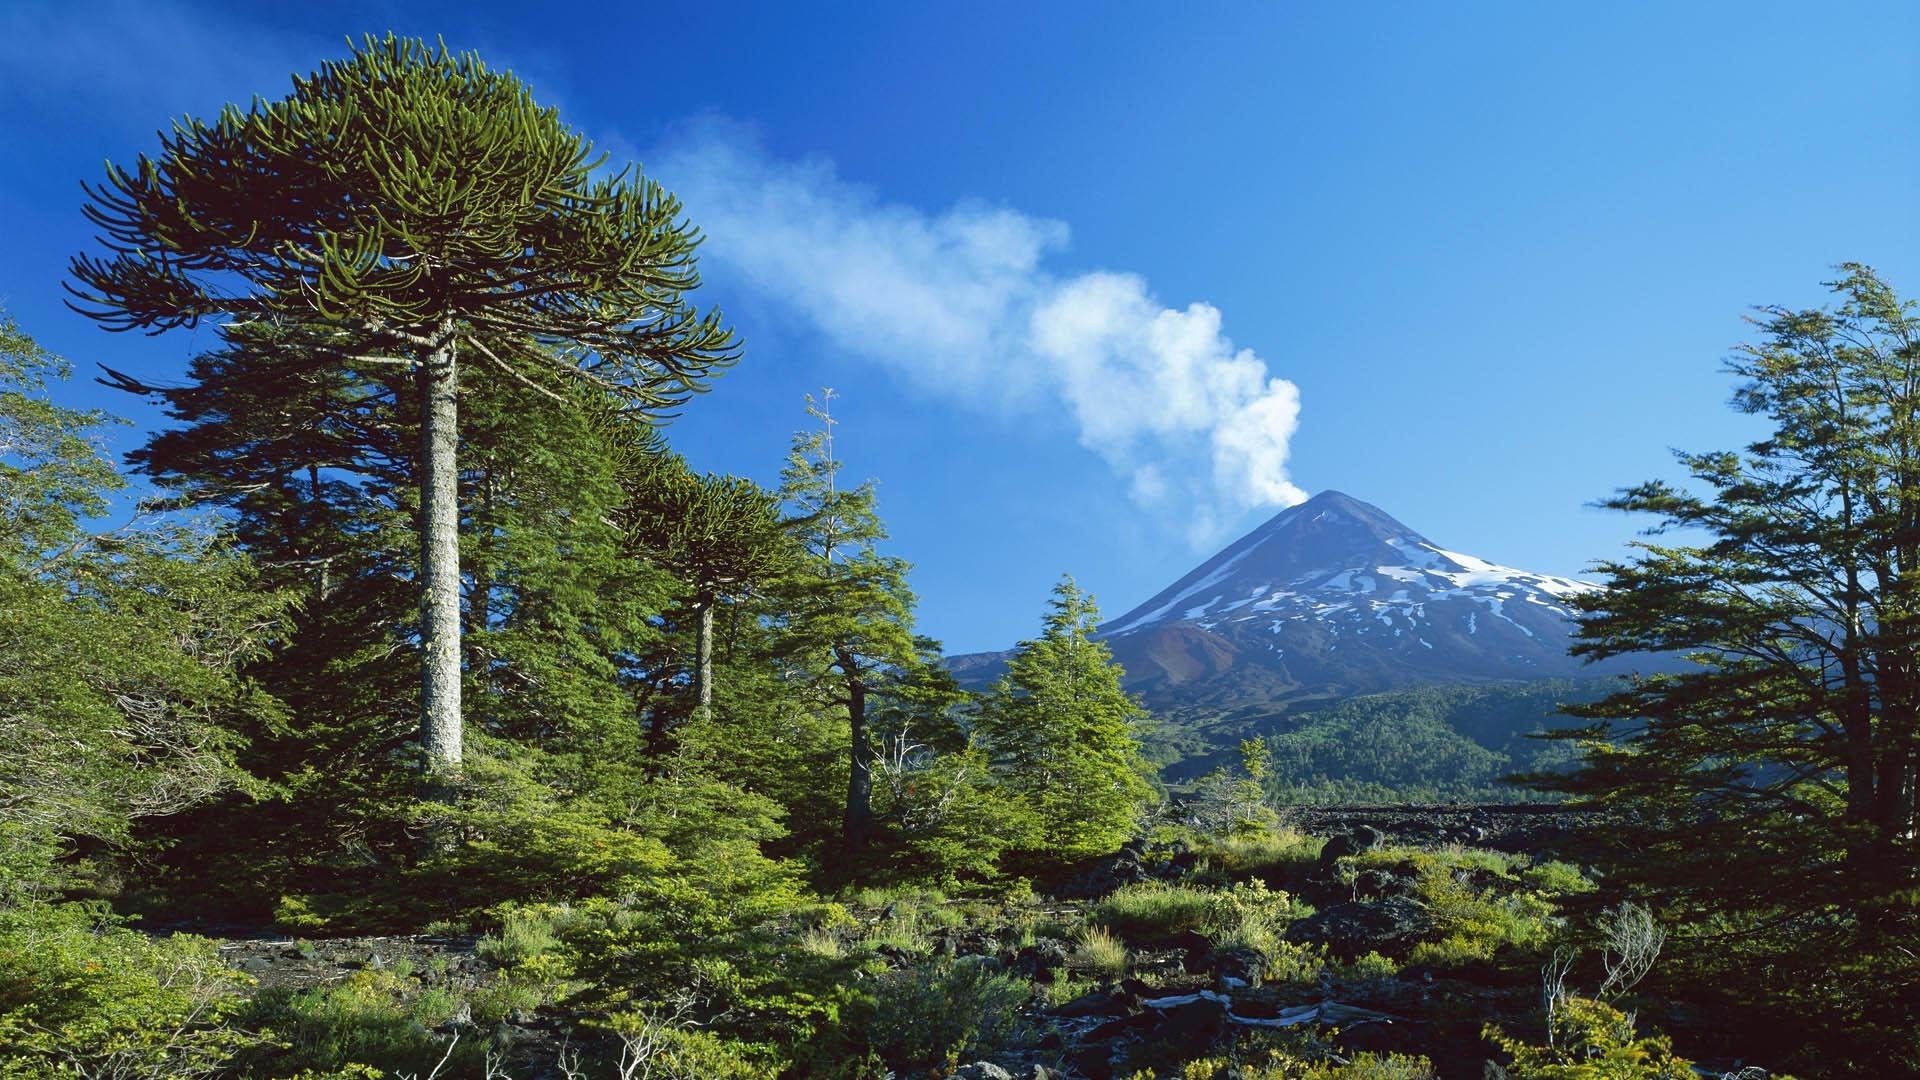 General 1920x1080 nature landscape trees volcano smoke snowy peak Chile daylight blue sky South America